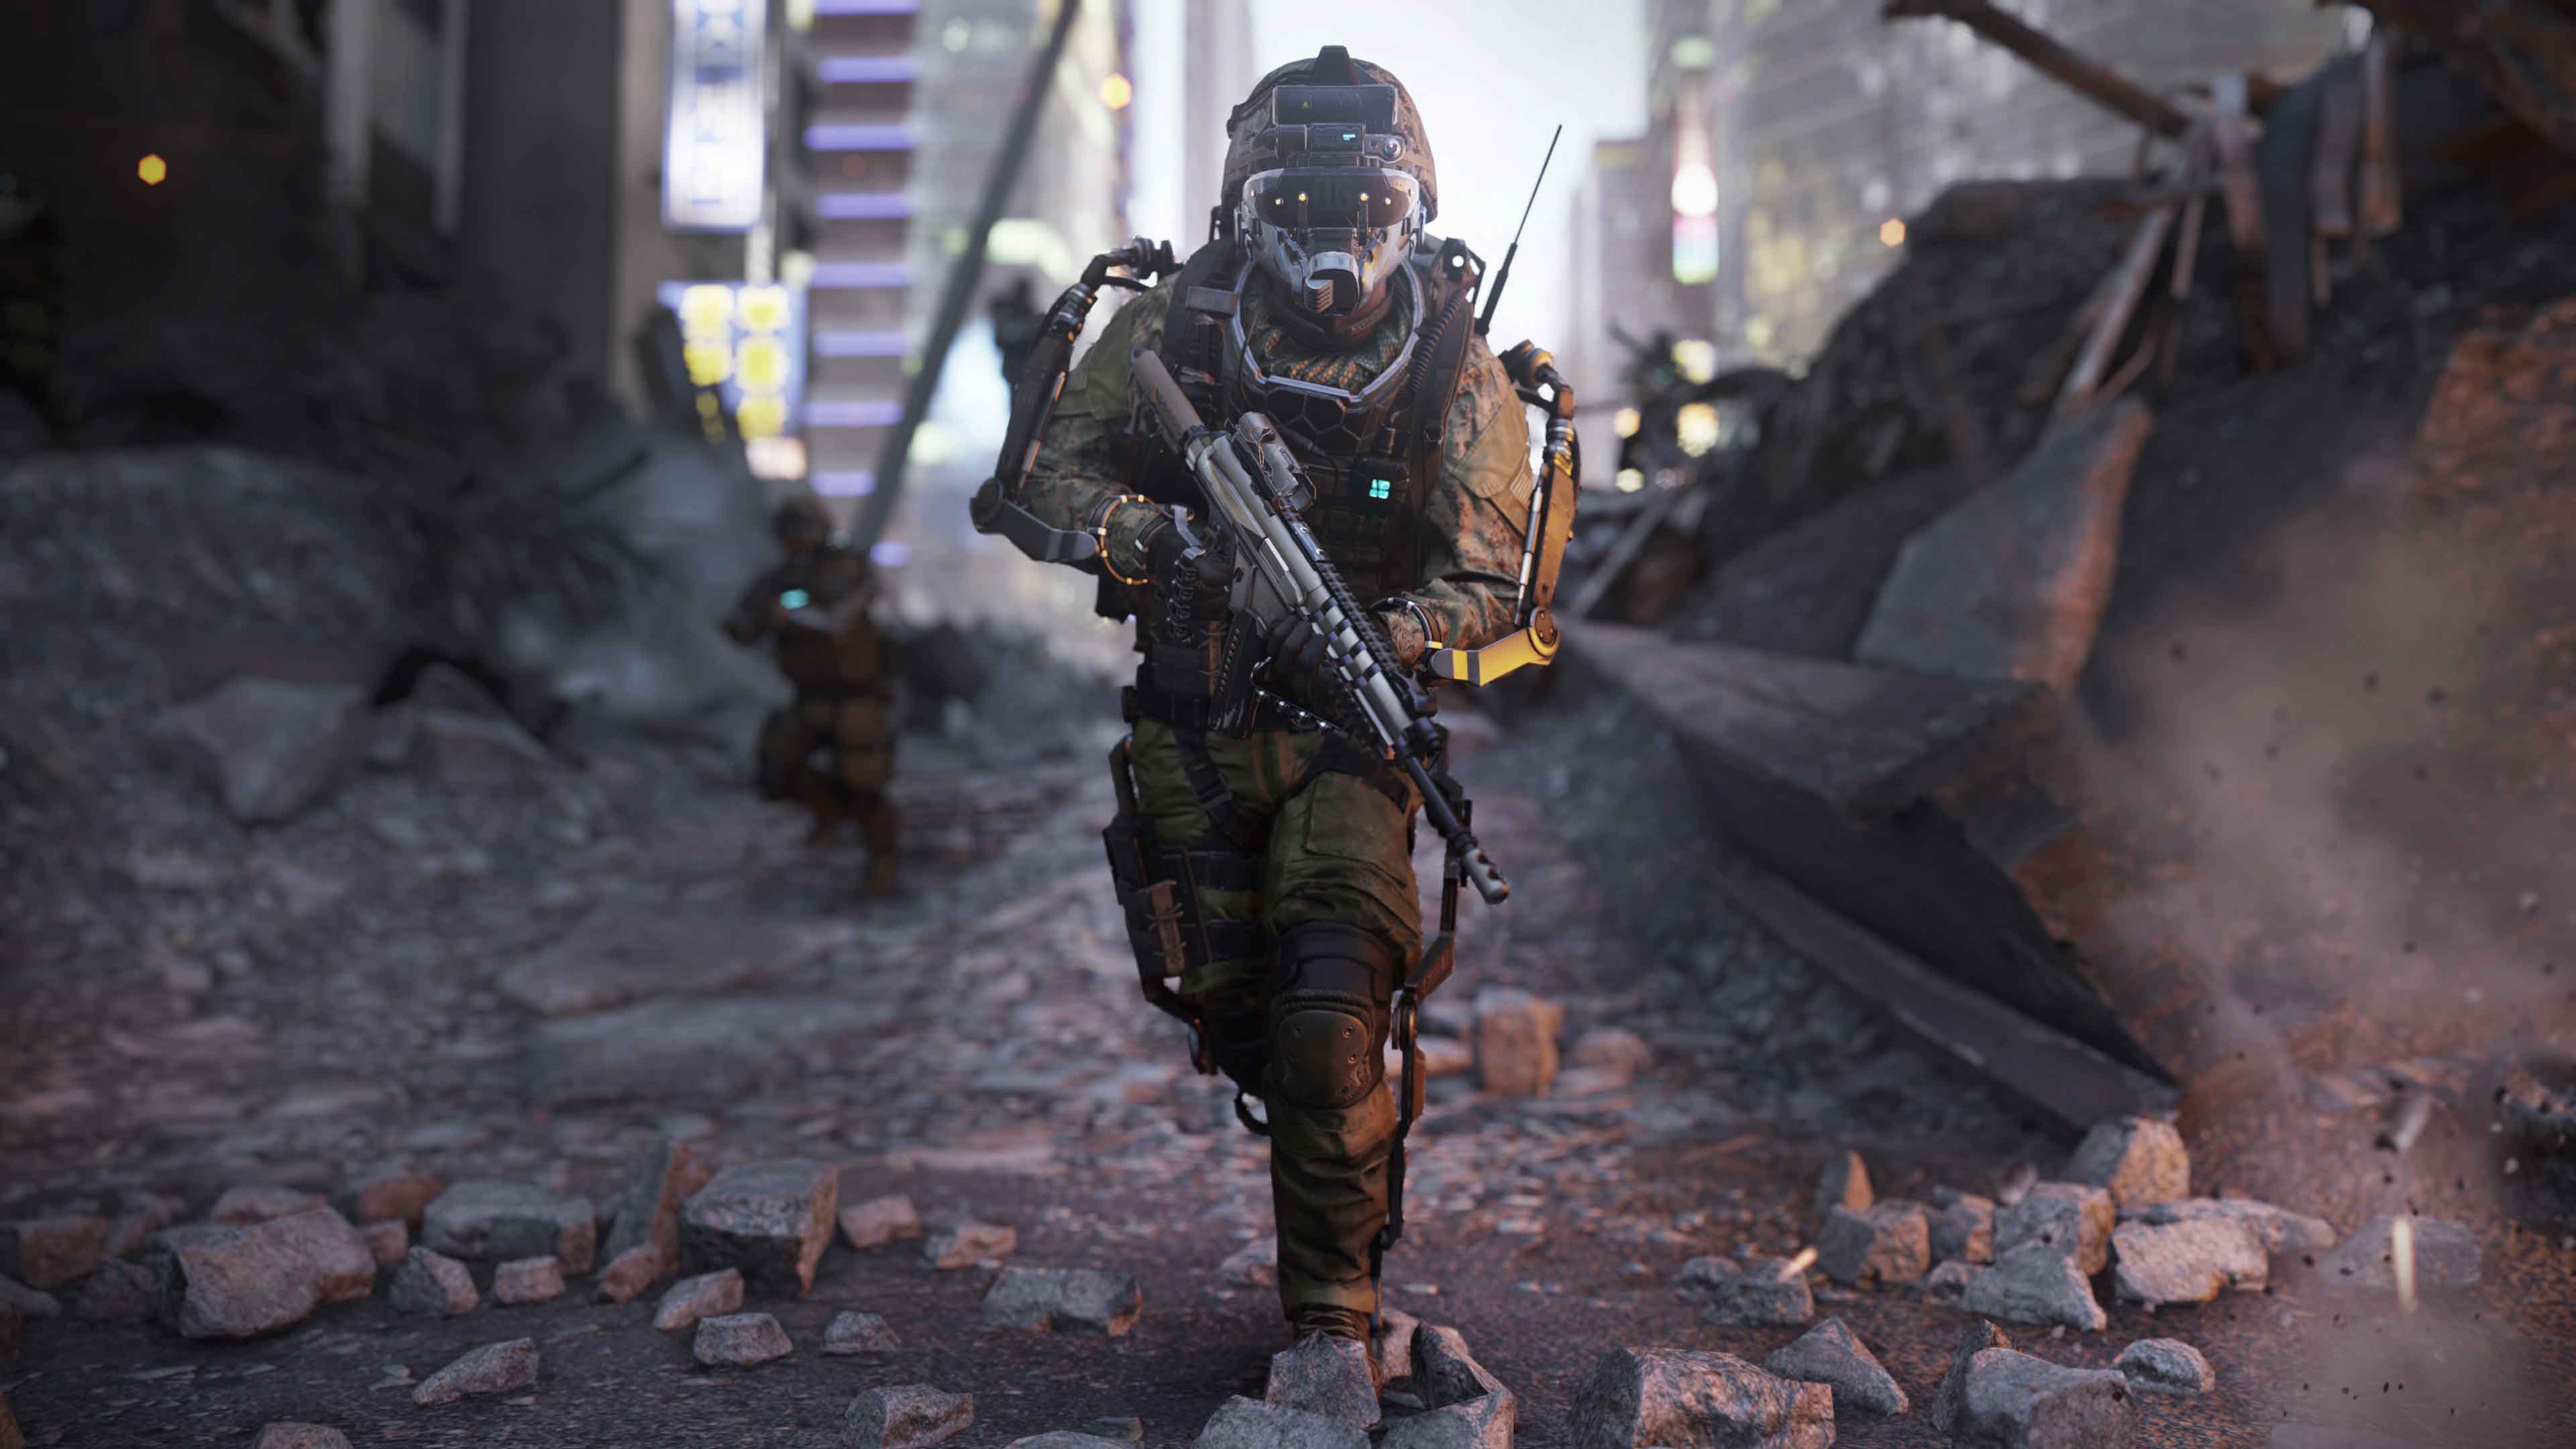 Call Of Duty Advanced Warfare HD Wallpaper Background